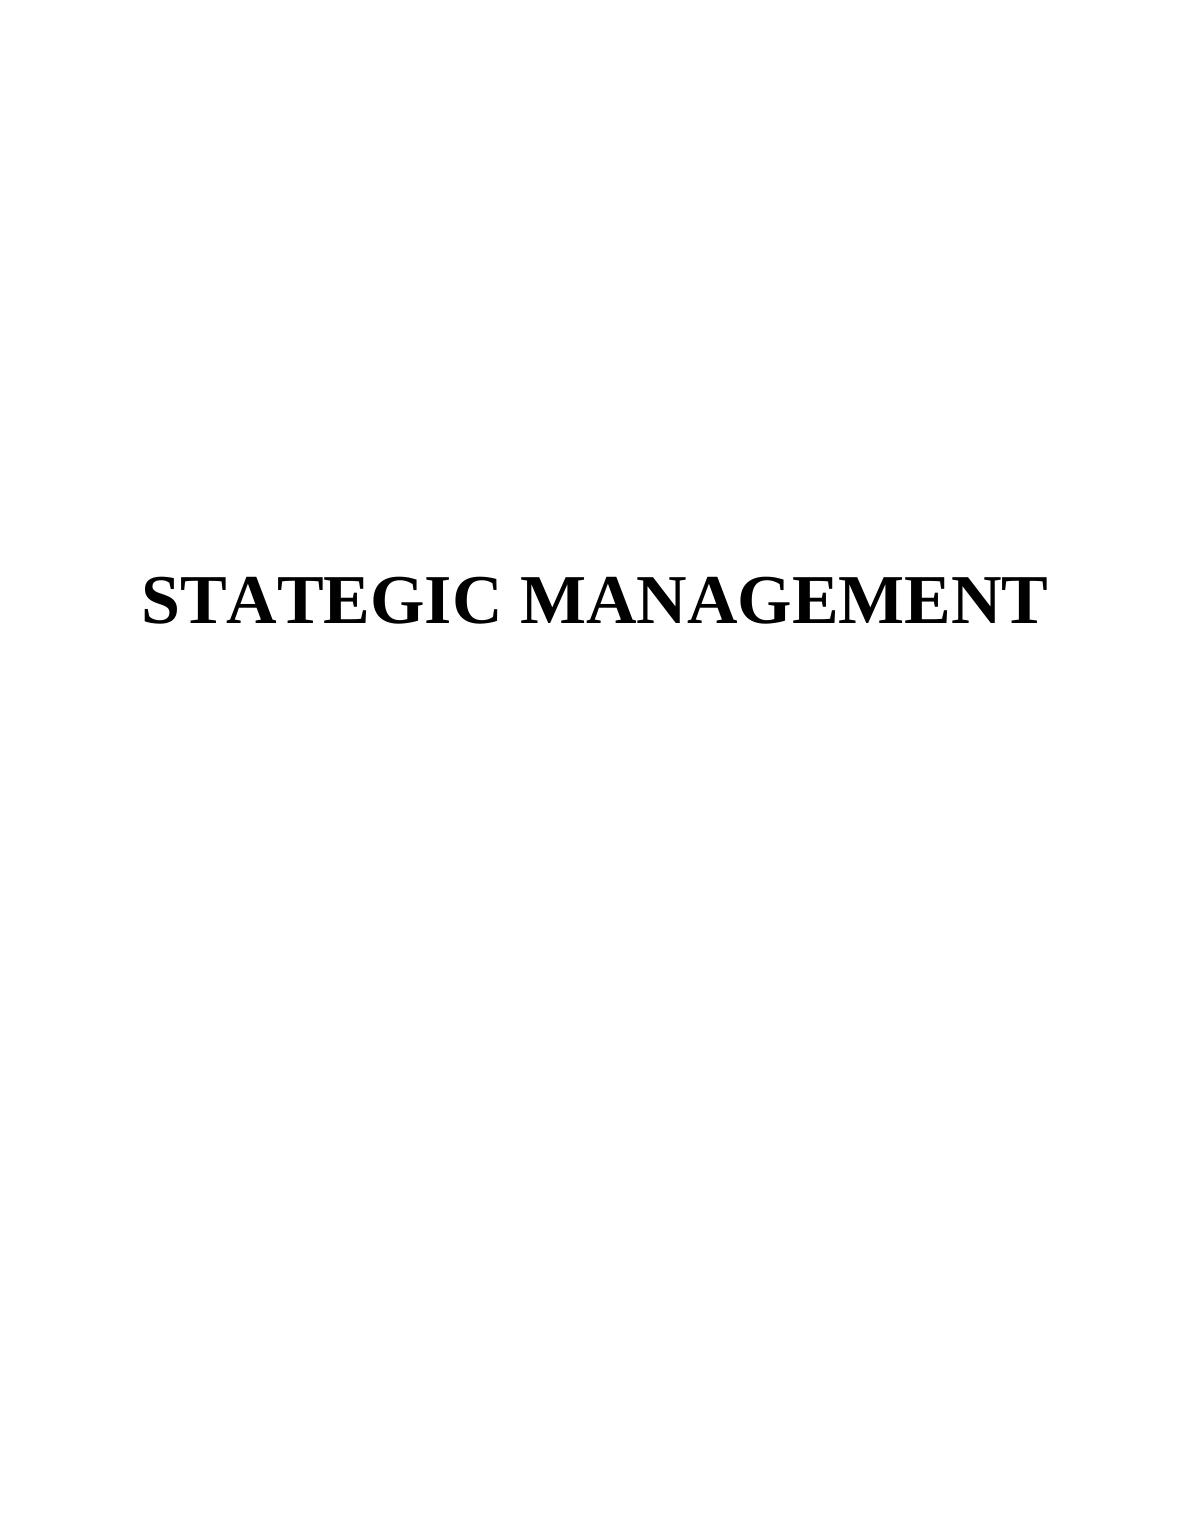 Strategic Management: Analysis of Primark_1